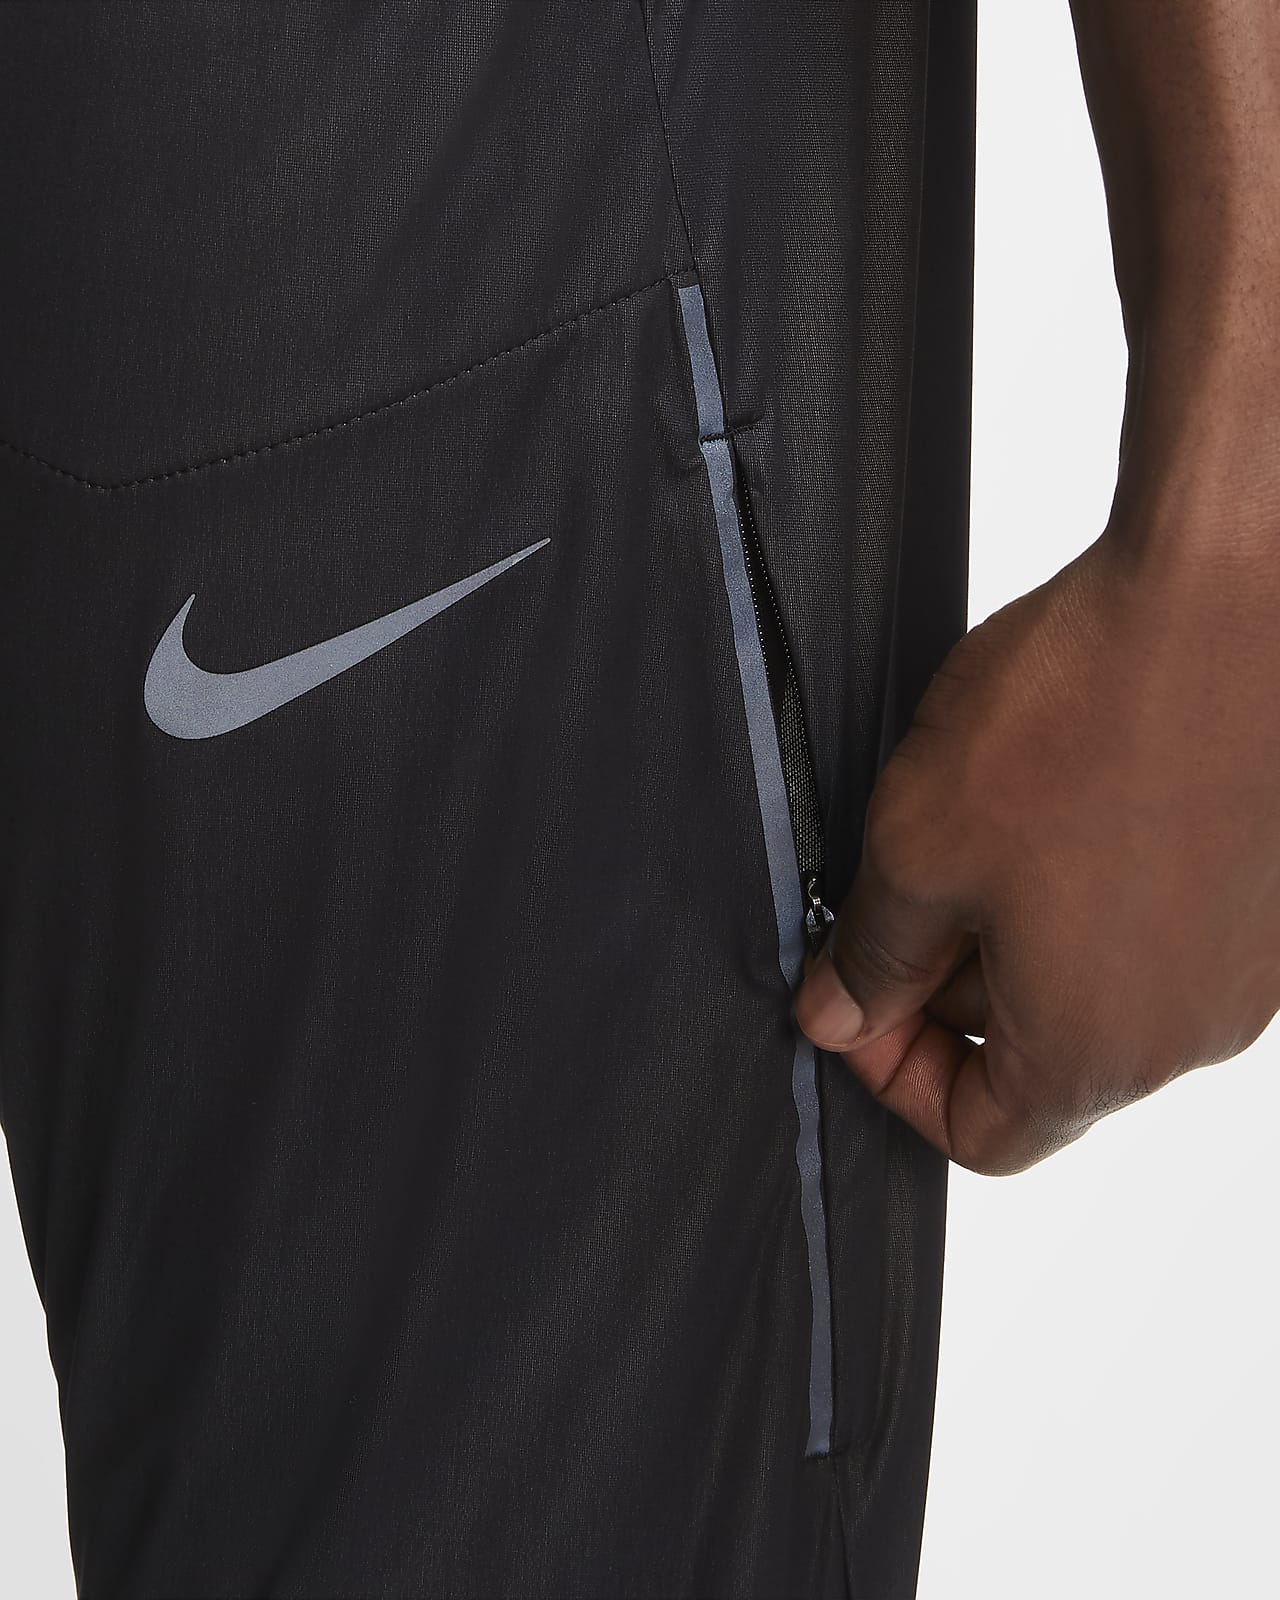 Nike Swift Shield Men's Running Pants 